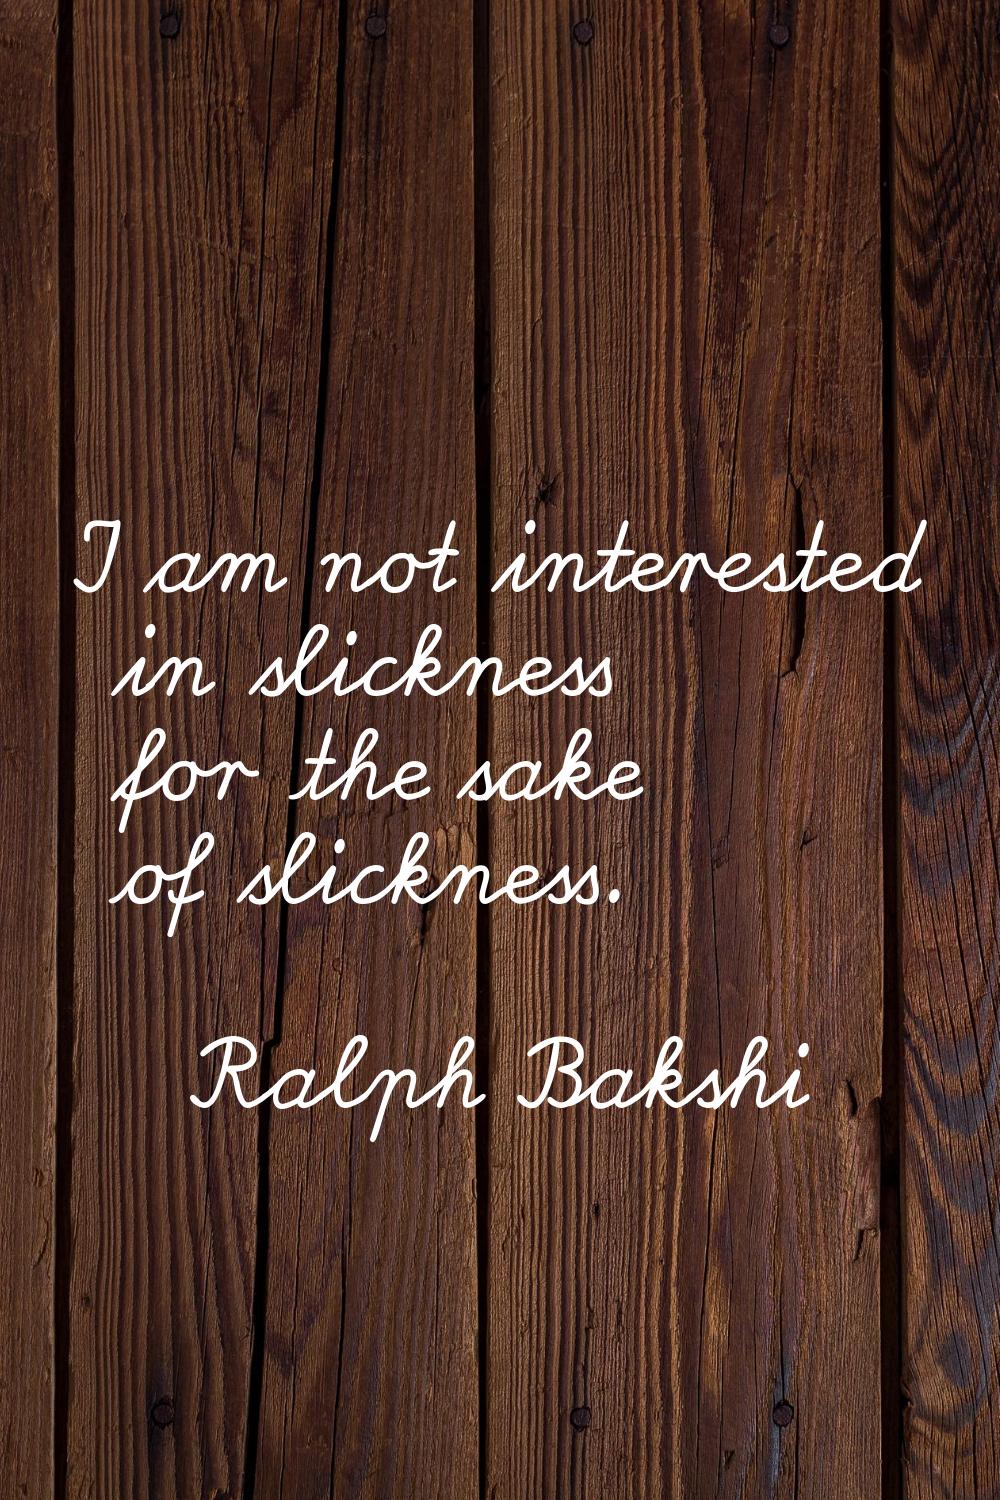 I am not interested in slickness for the sake of slickness.